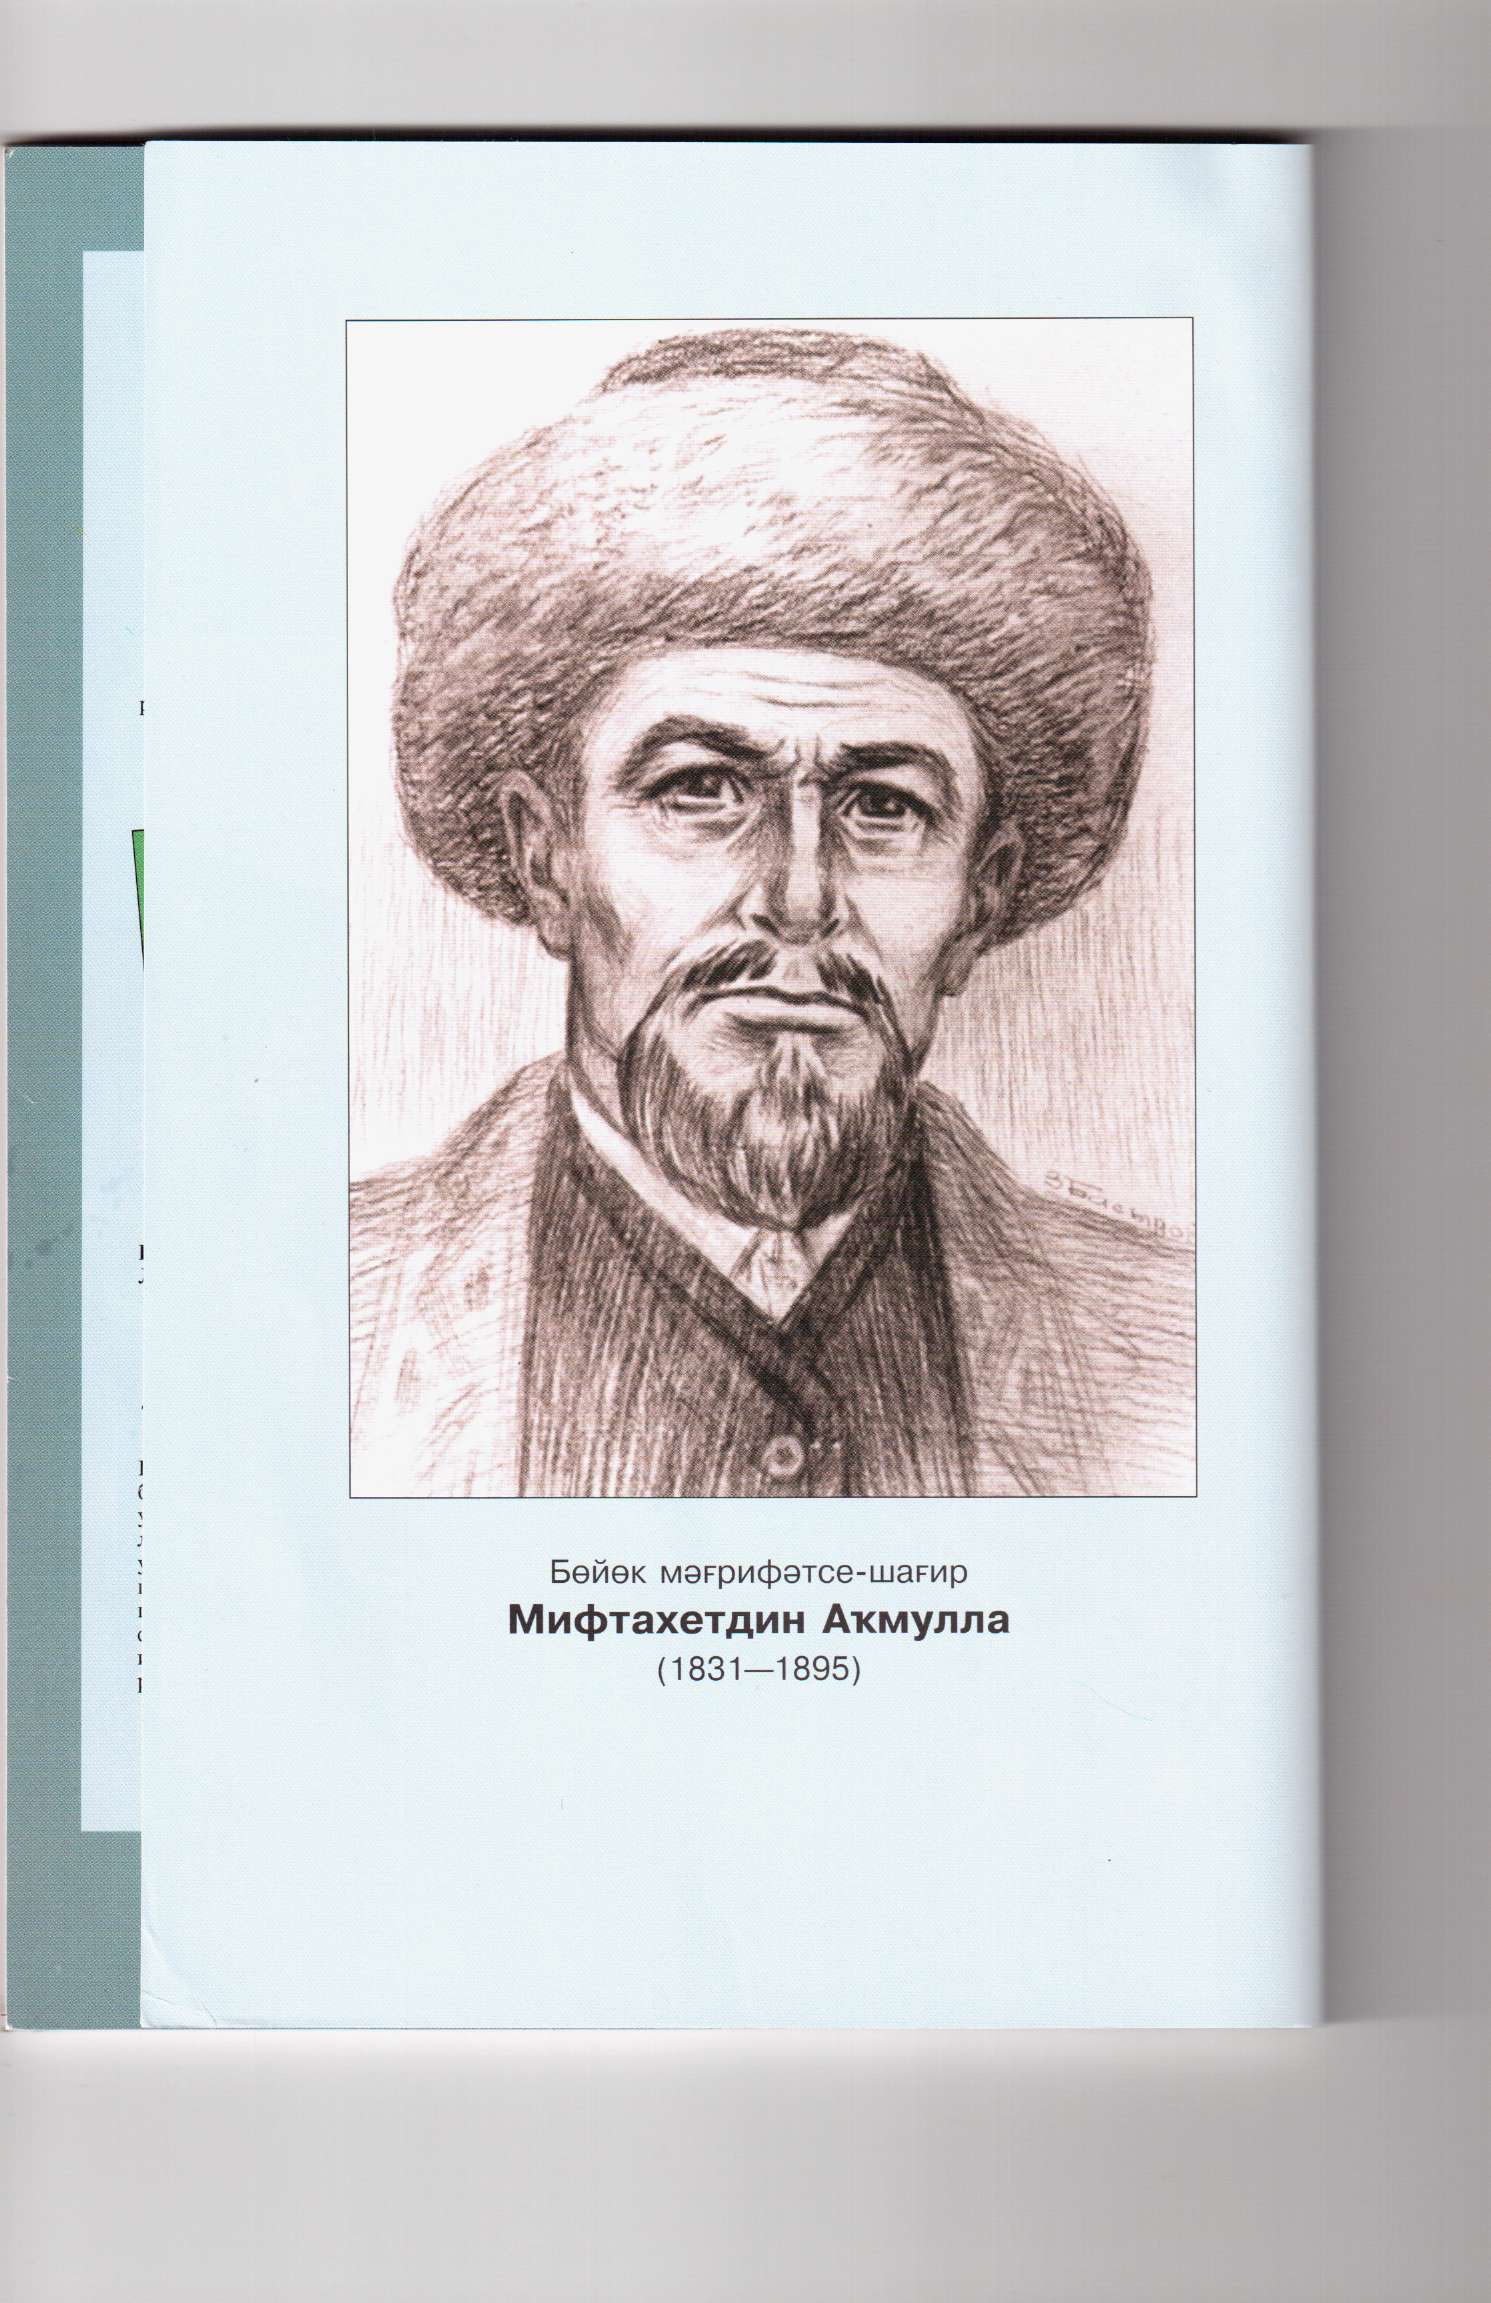 Конспект урока по истории и культуре Башкортостана на тему М. Акмулла